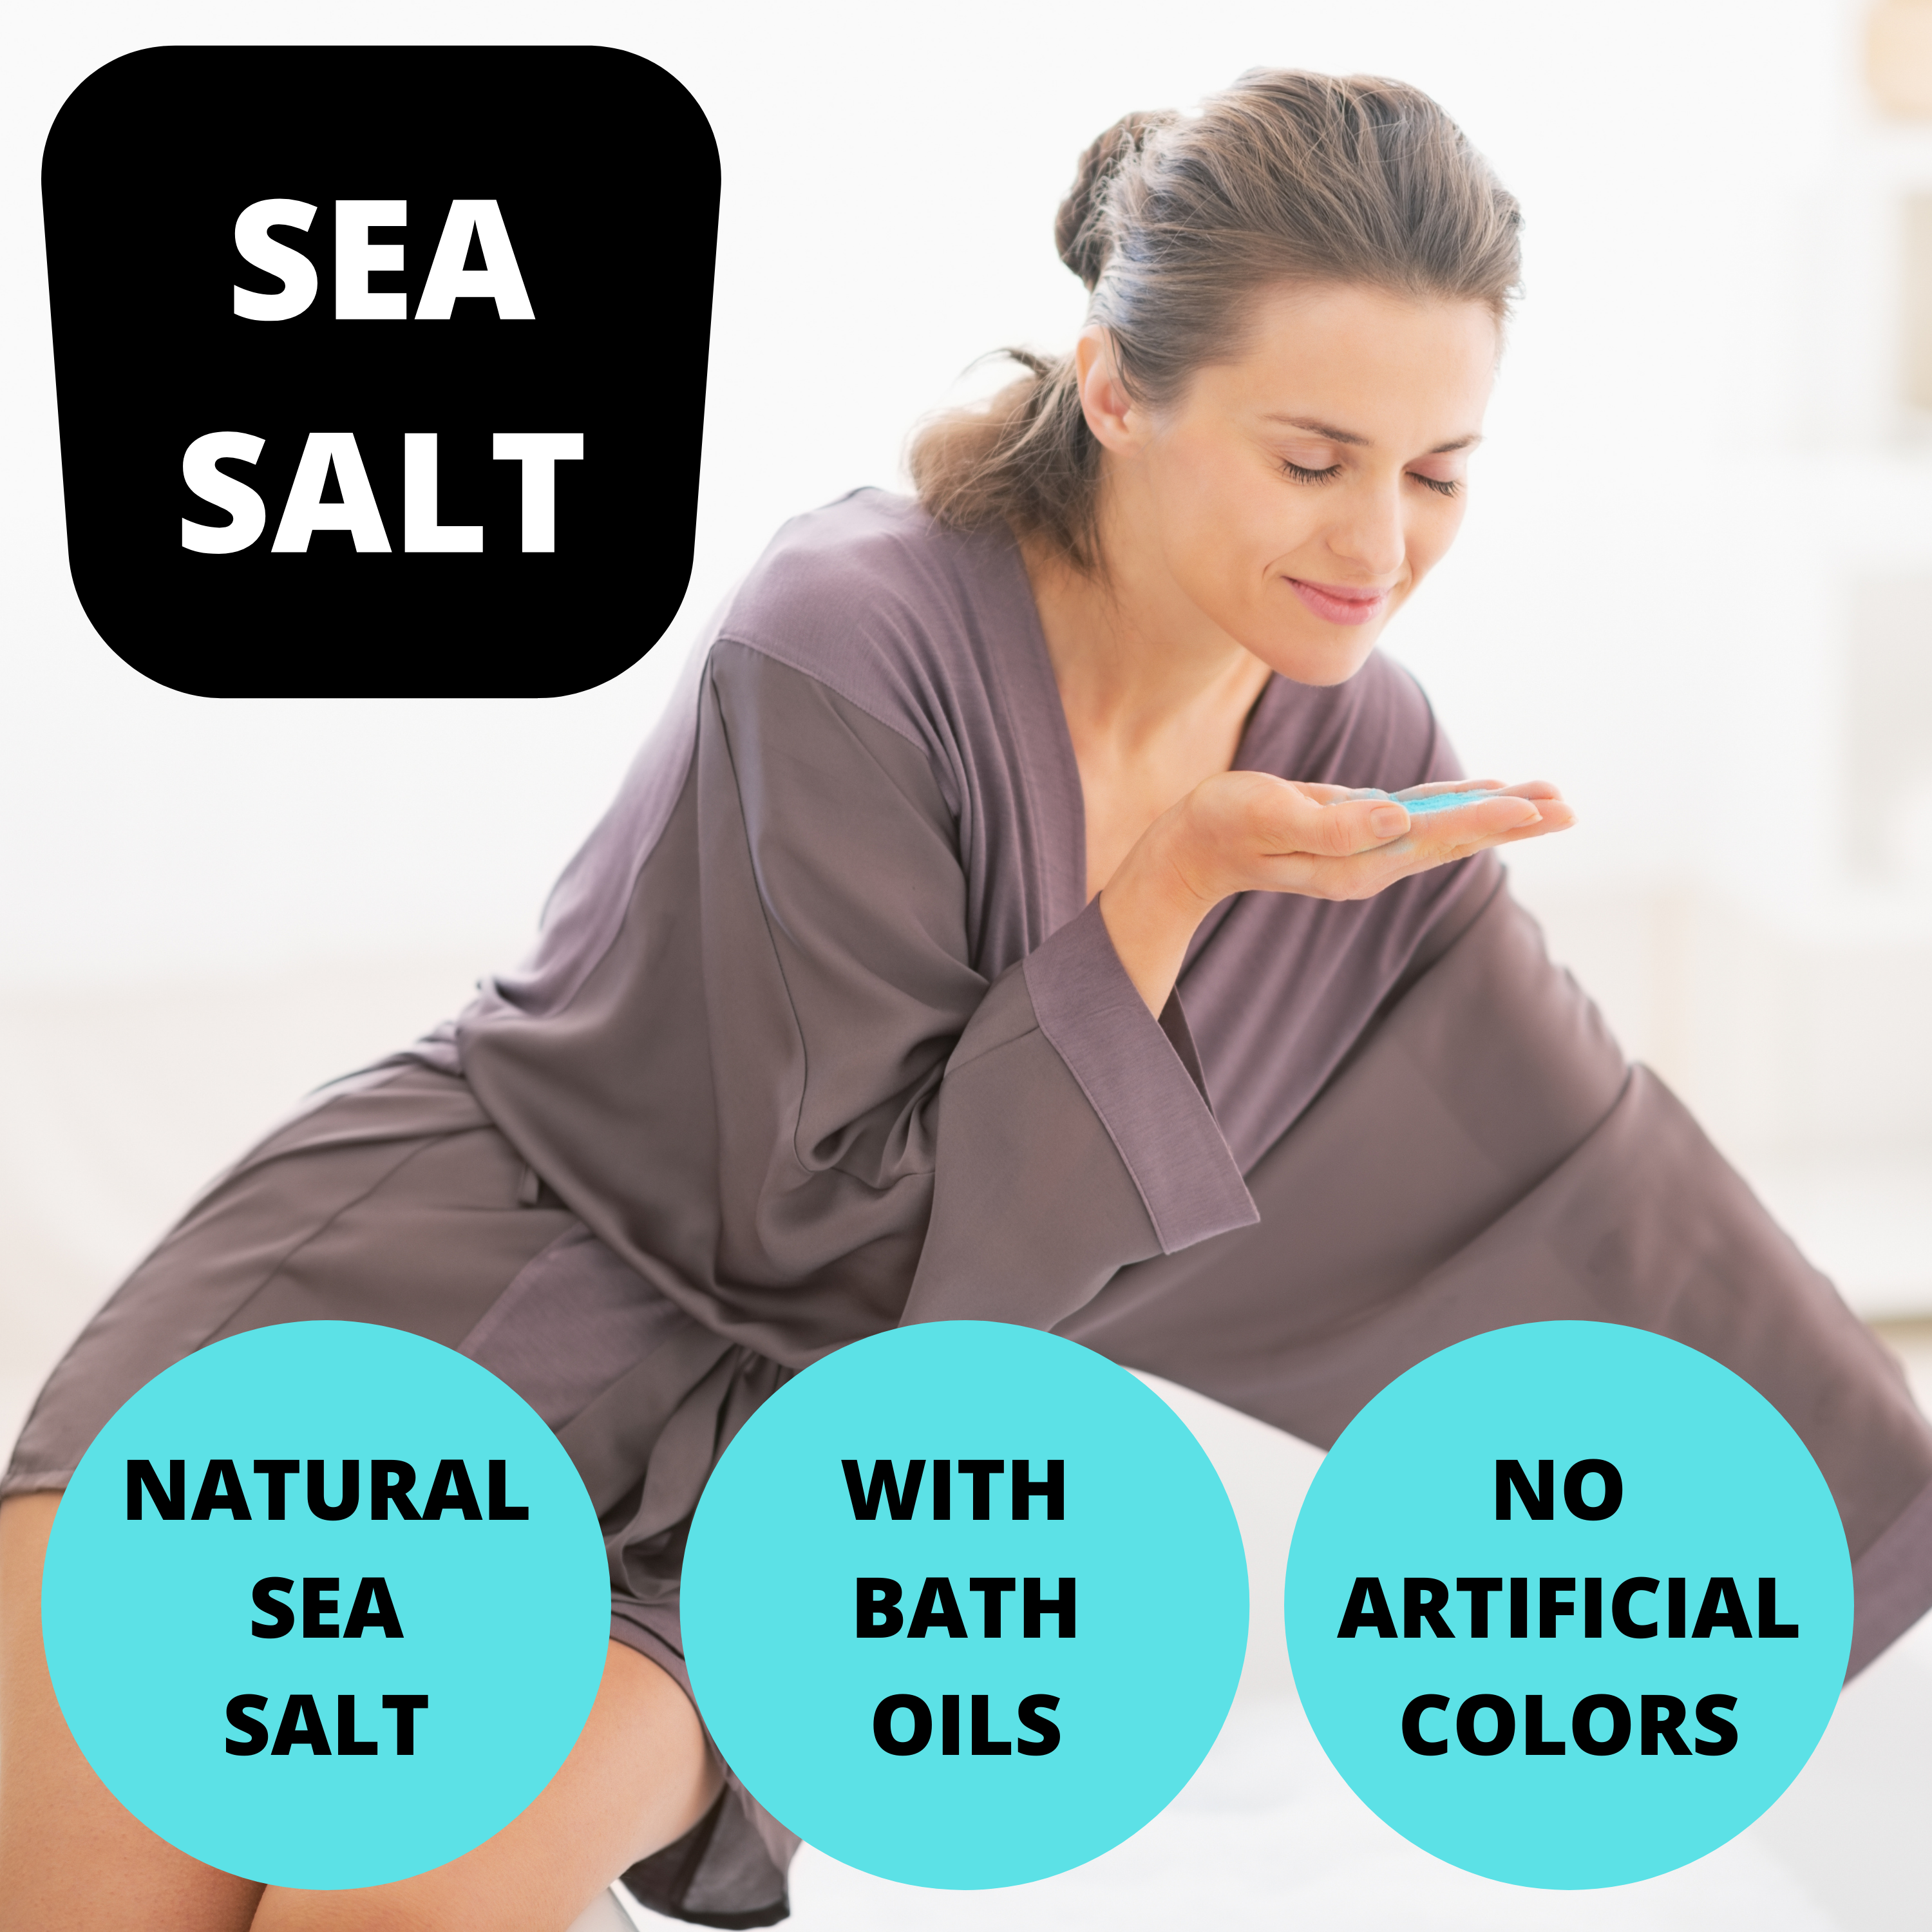 Black Canyon Egg Nog Scented Sea Salt Bath Soak